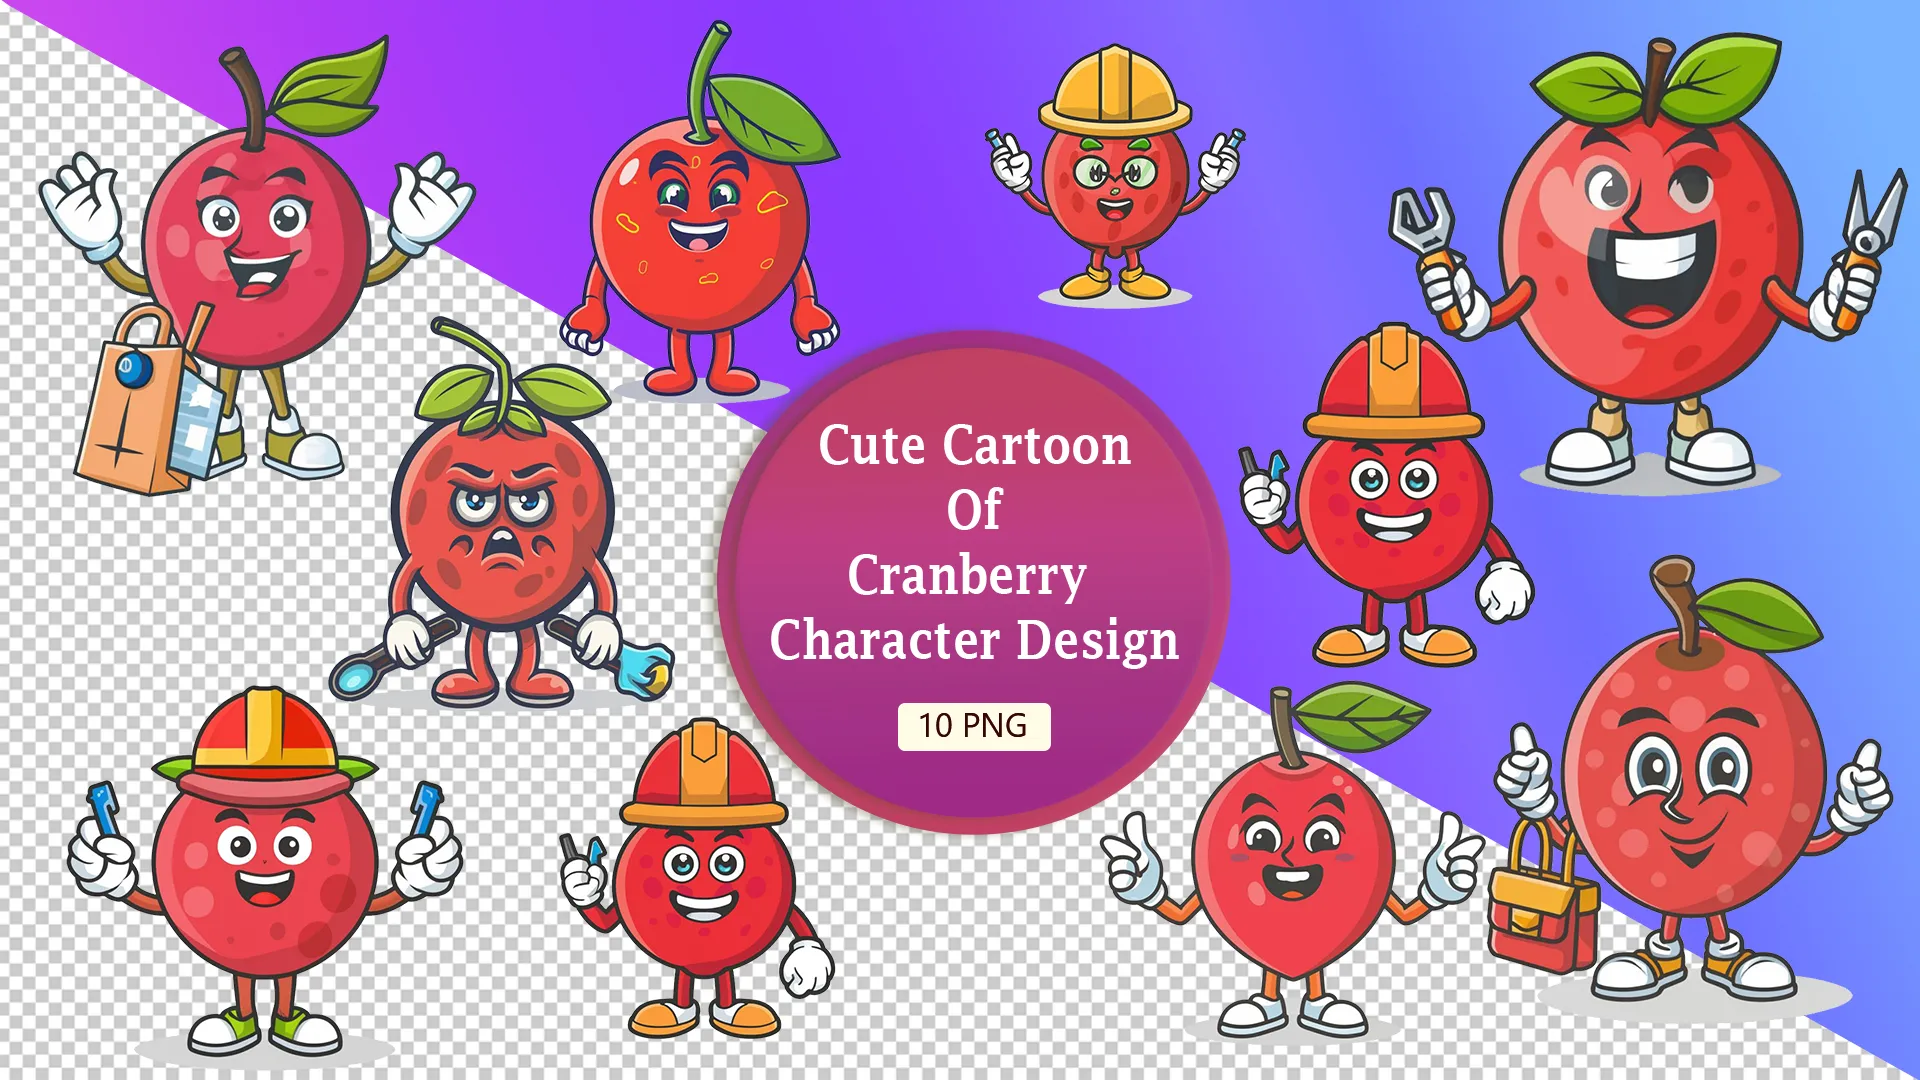 Playful Cranberry Design Pack